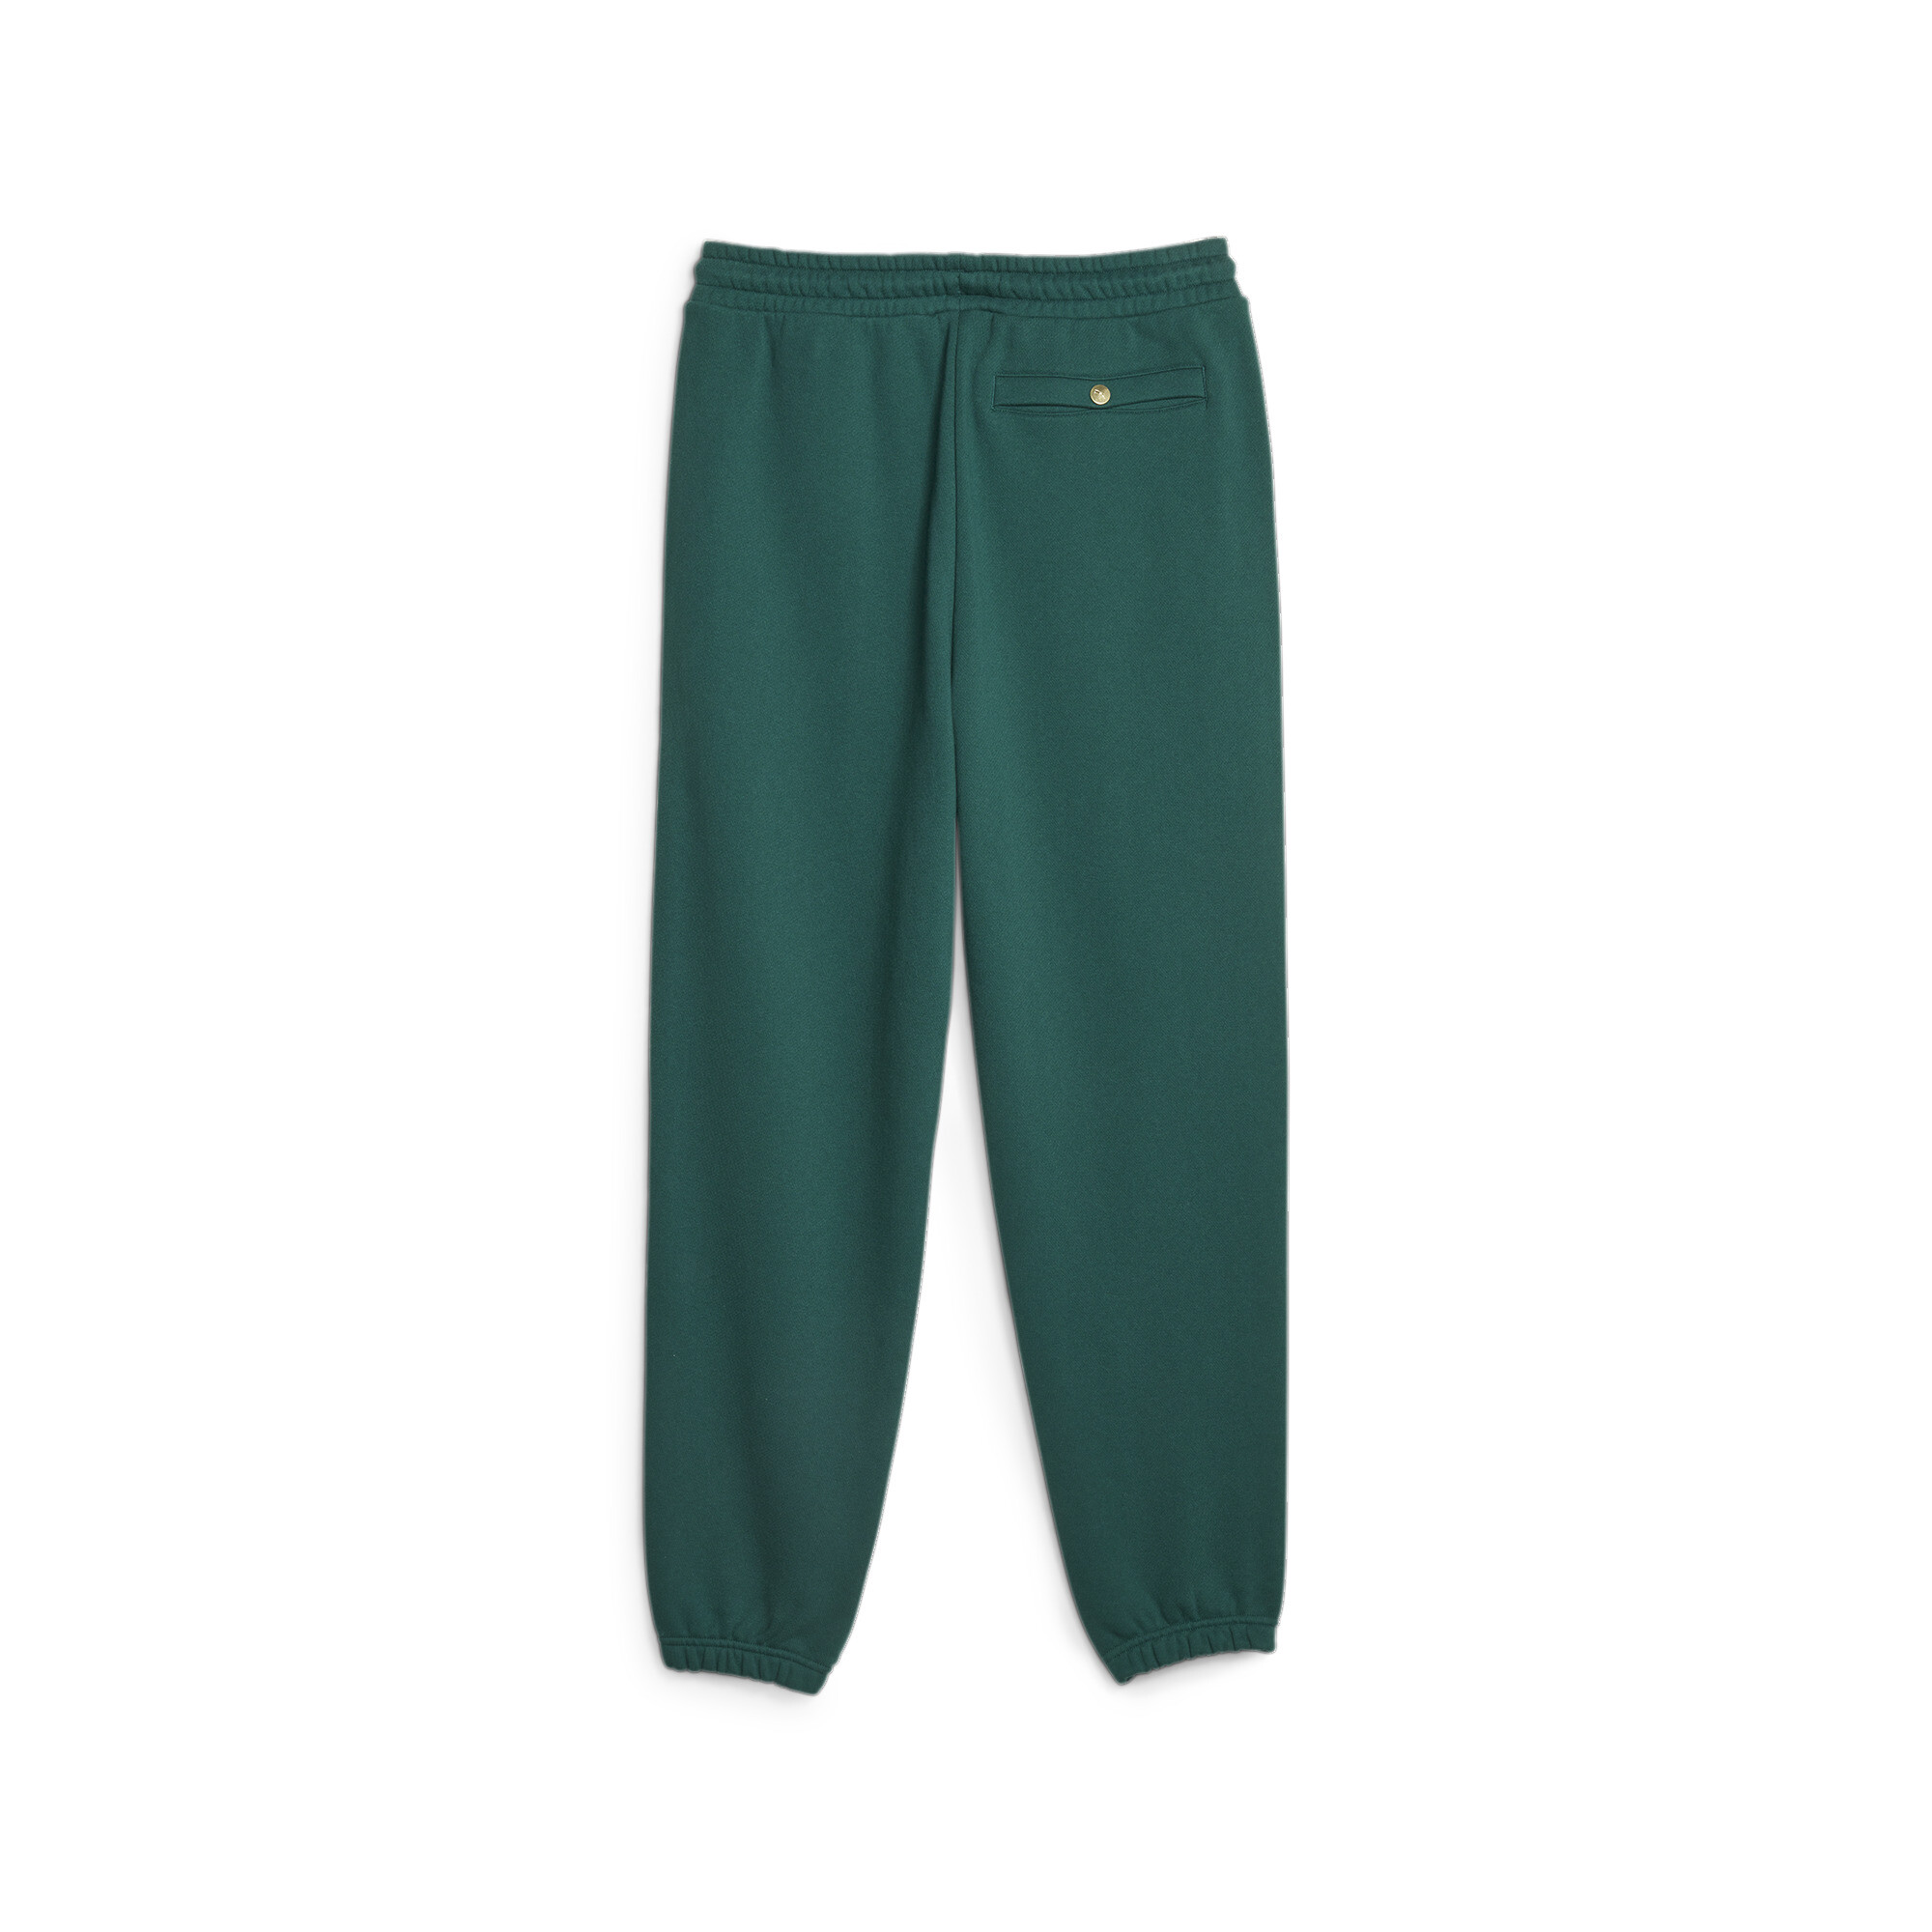 Men's Puma X STAPLE's Sweatpants, Green, Size XL, Clothing